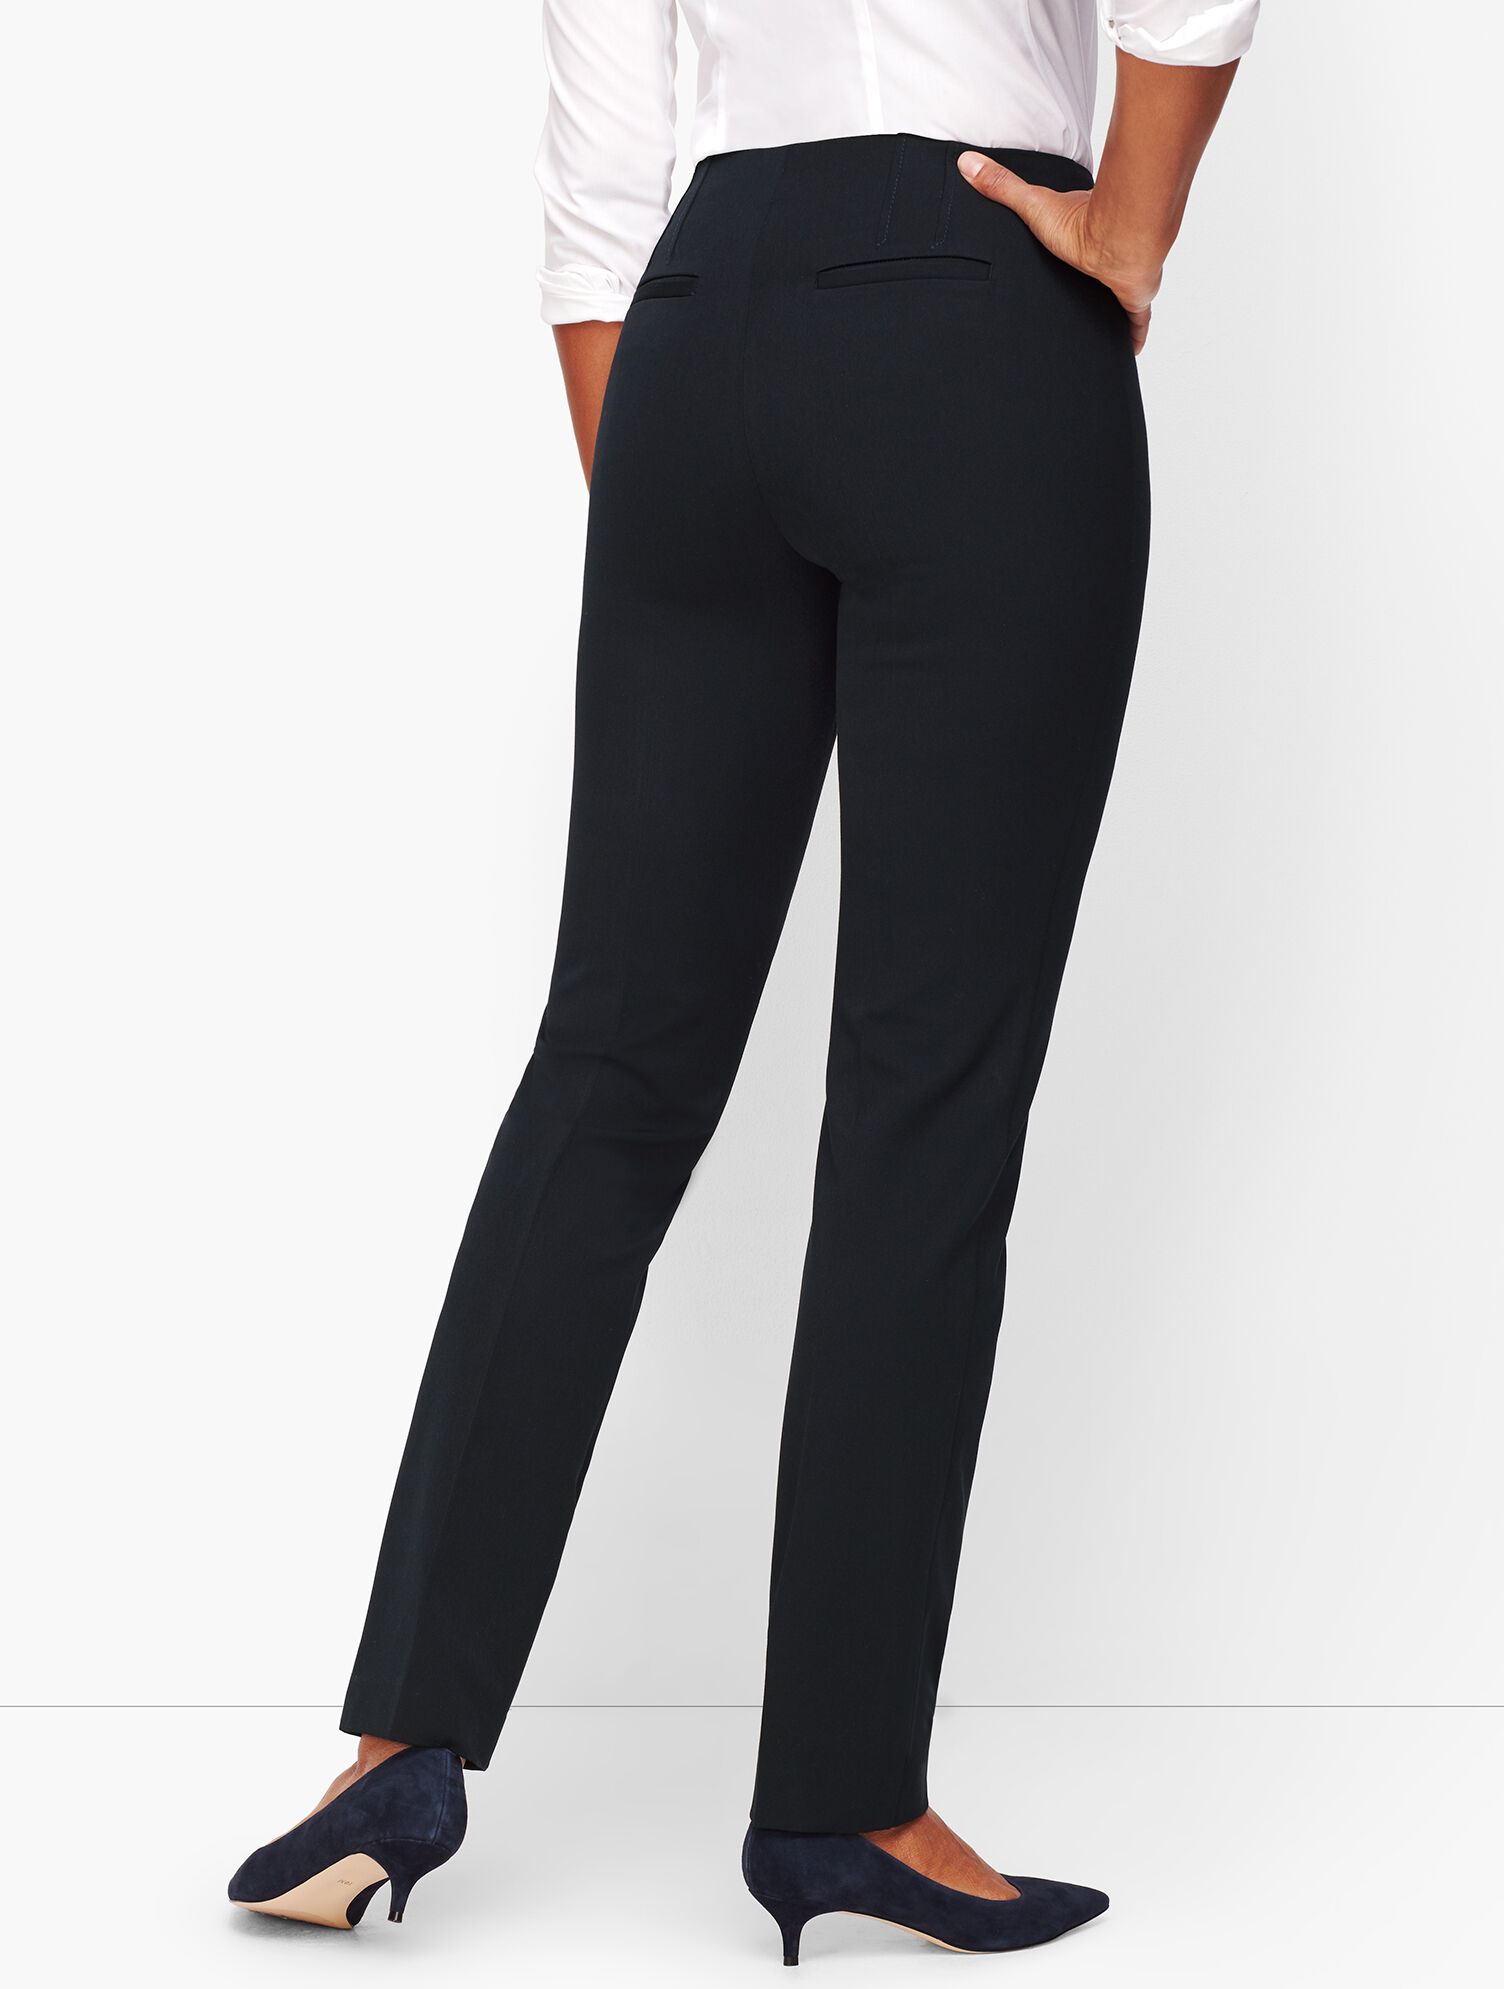 Talbots Irish Linen Womens Size 18 Black Dress Pants Side Zip, Lined NWT $98